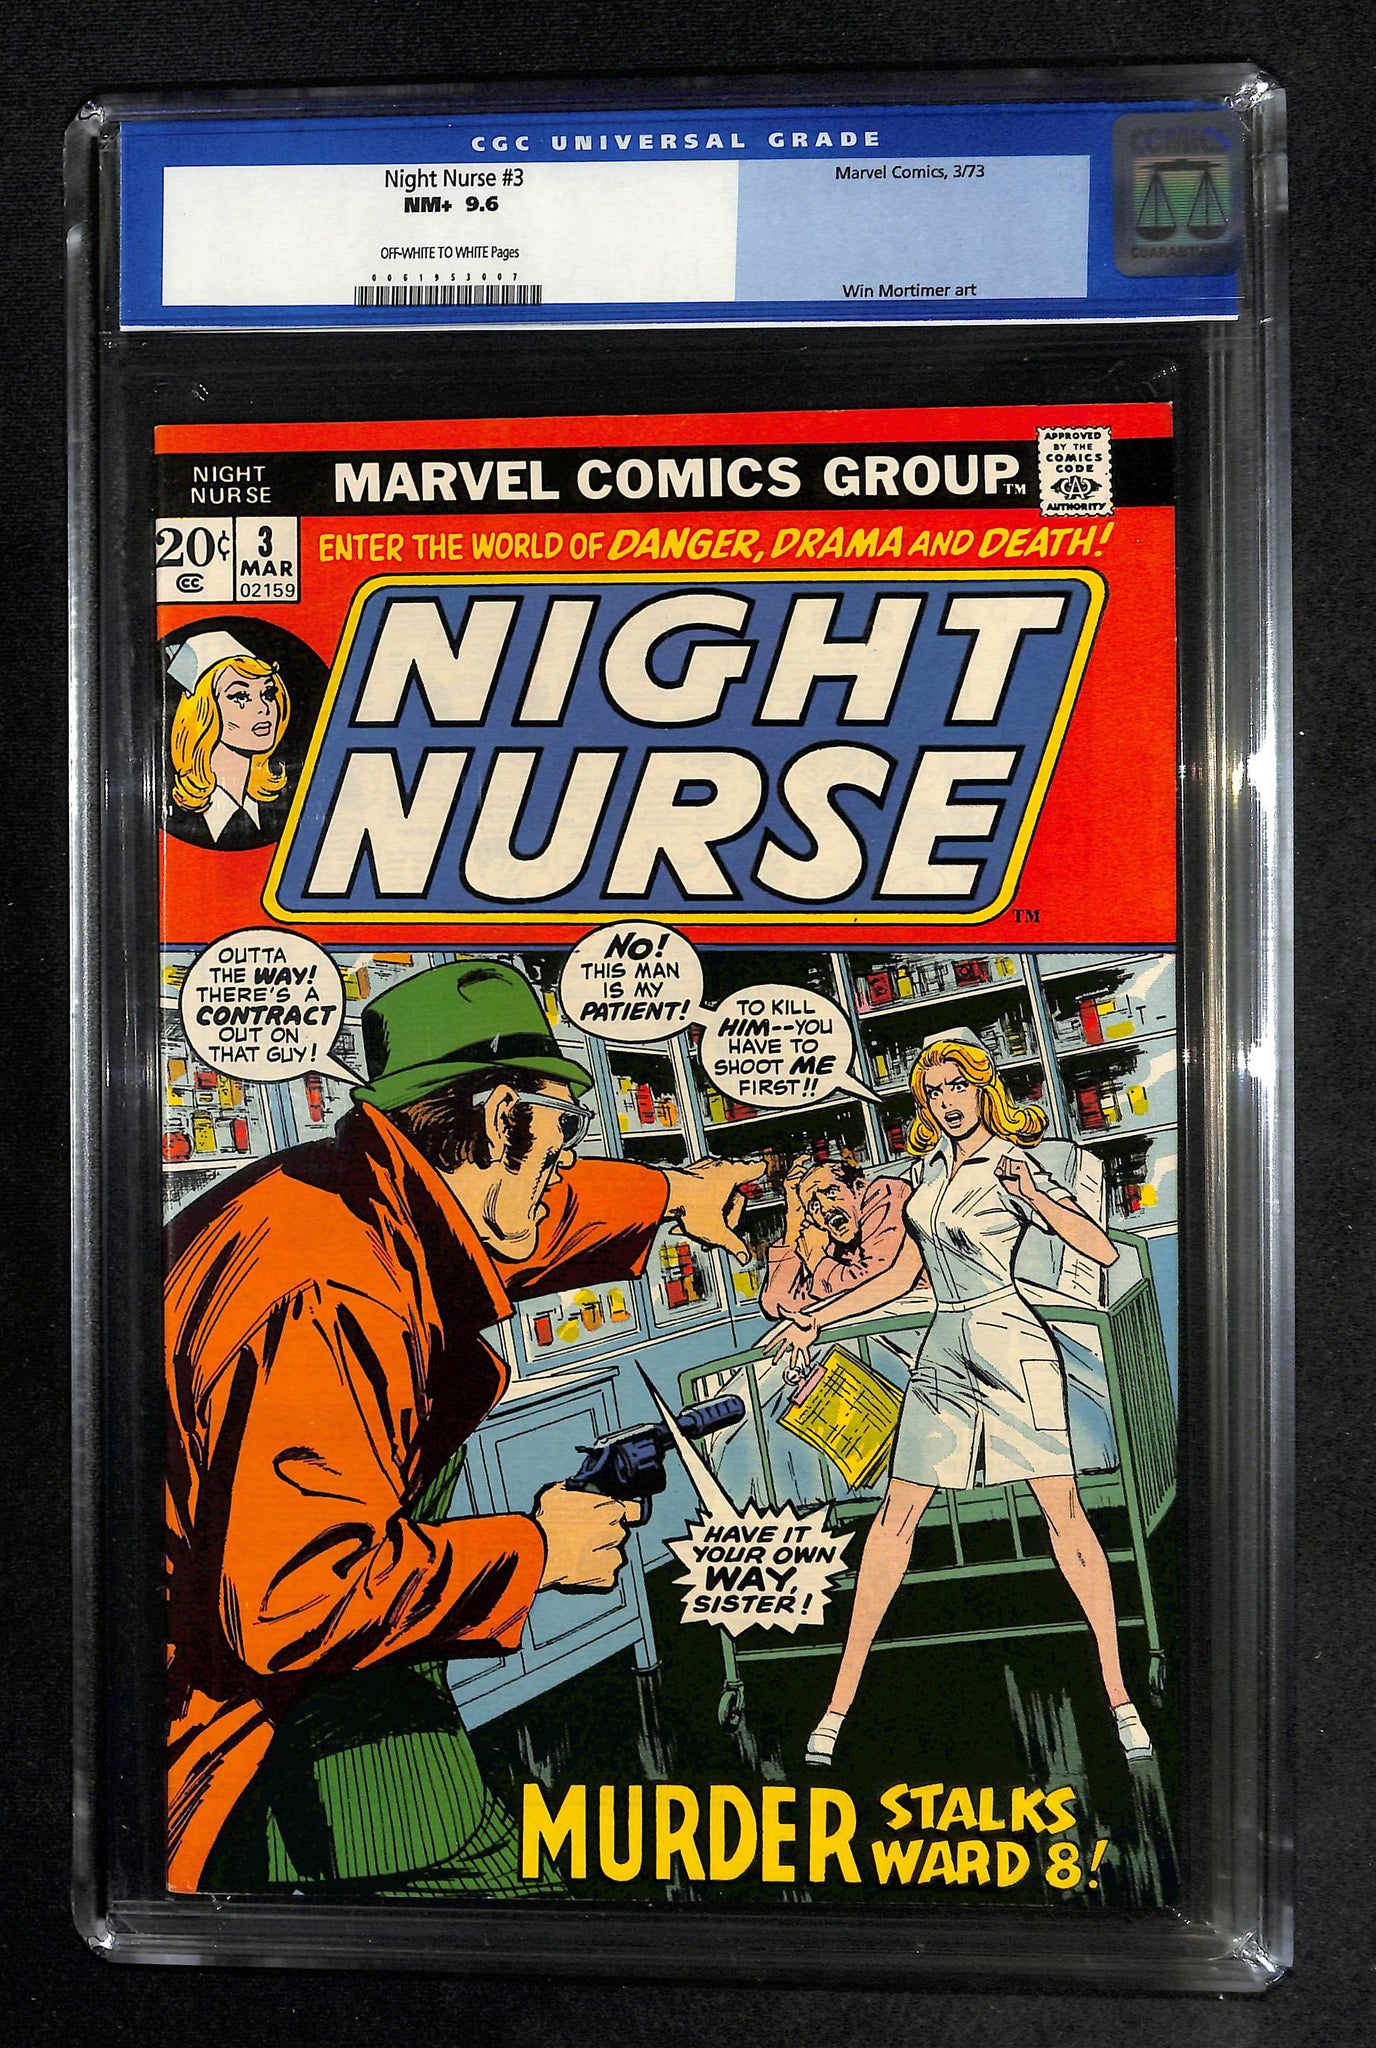 Night Nurse #3 CGC 9.6 Monterey Collection